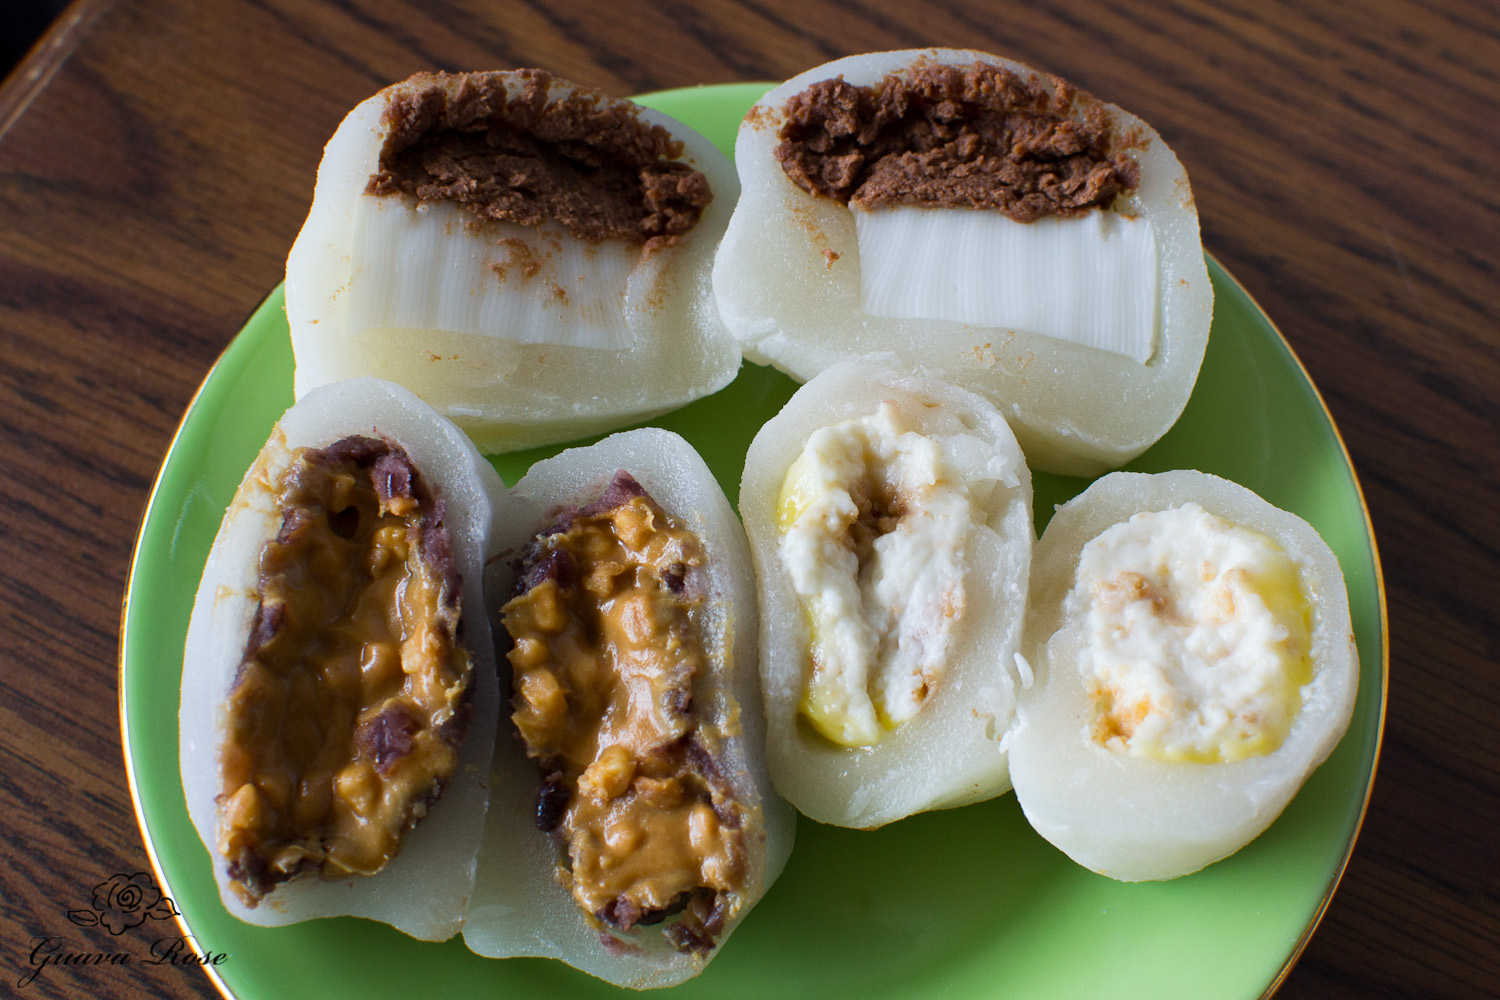 Cut open mochi: choc haupia, Peanut butter An, lilikoi cheesecake